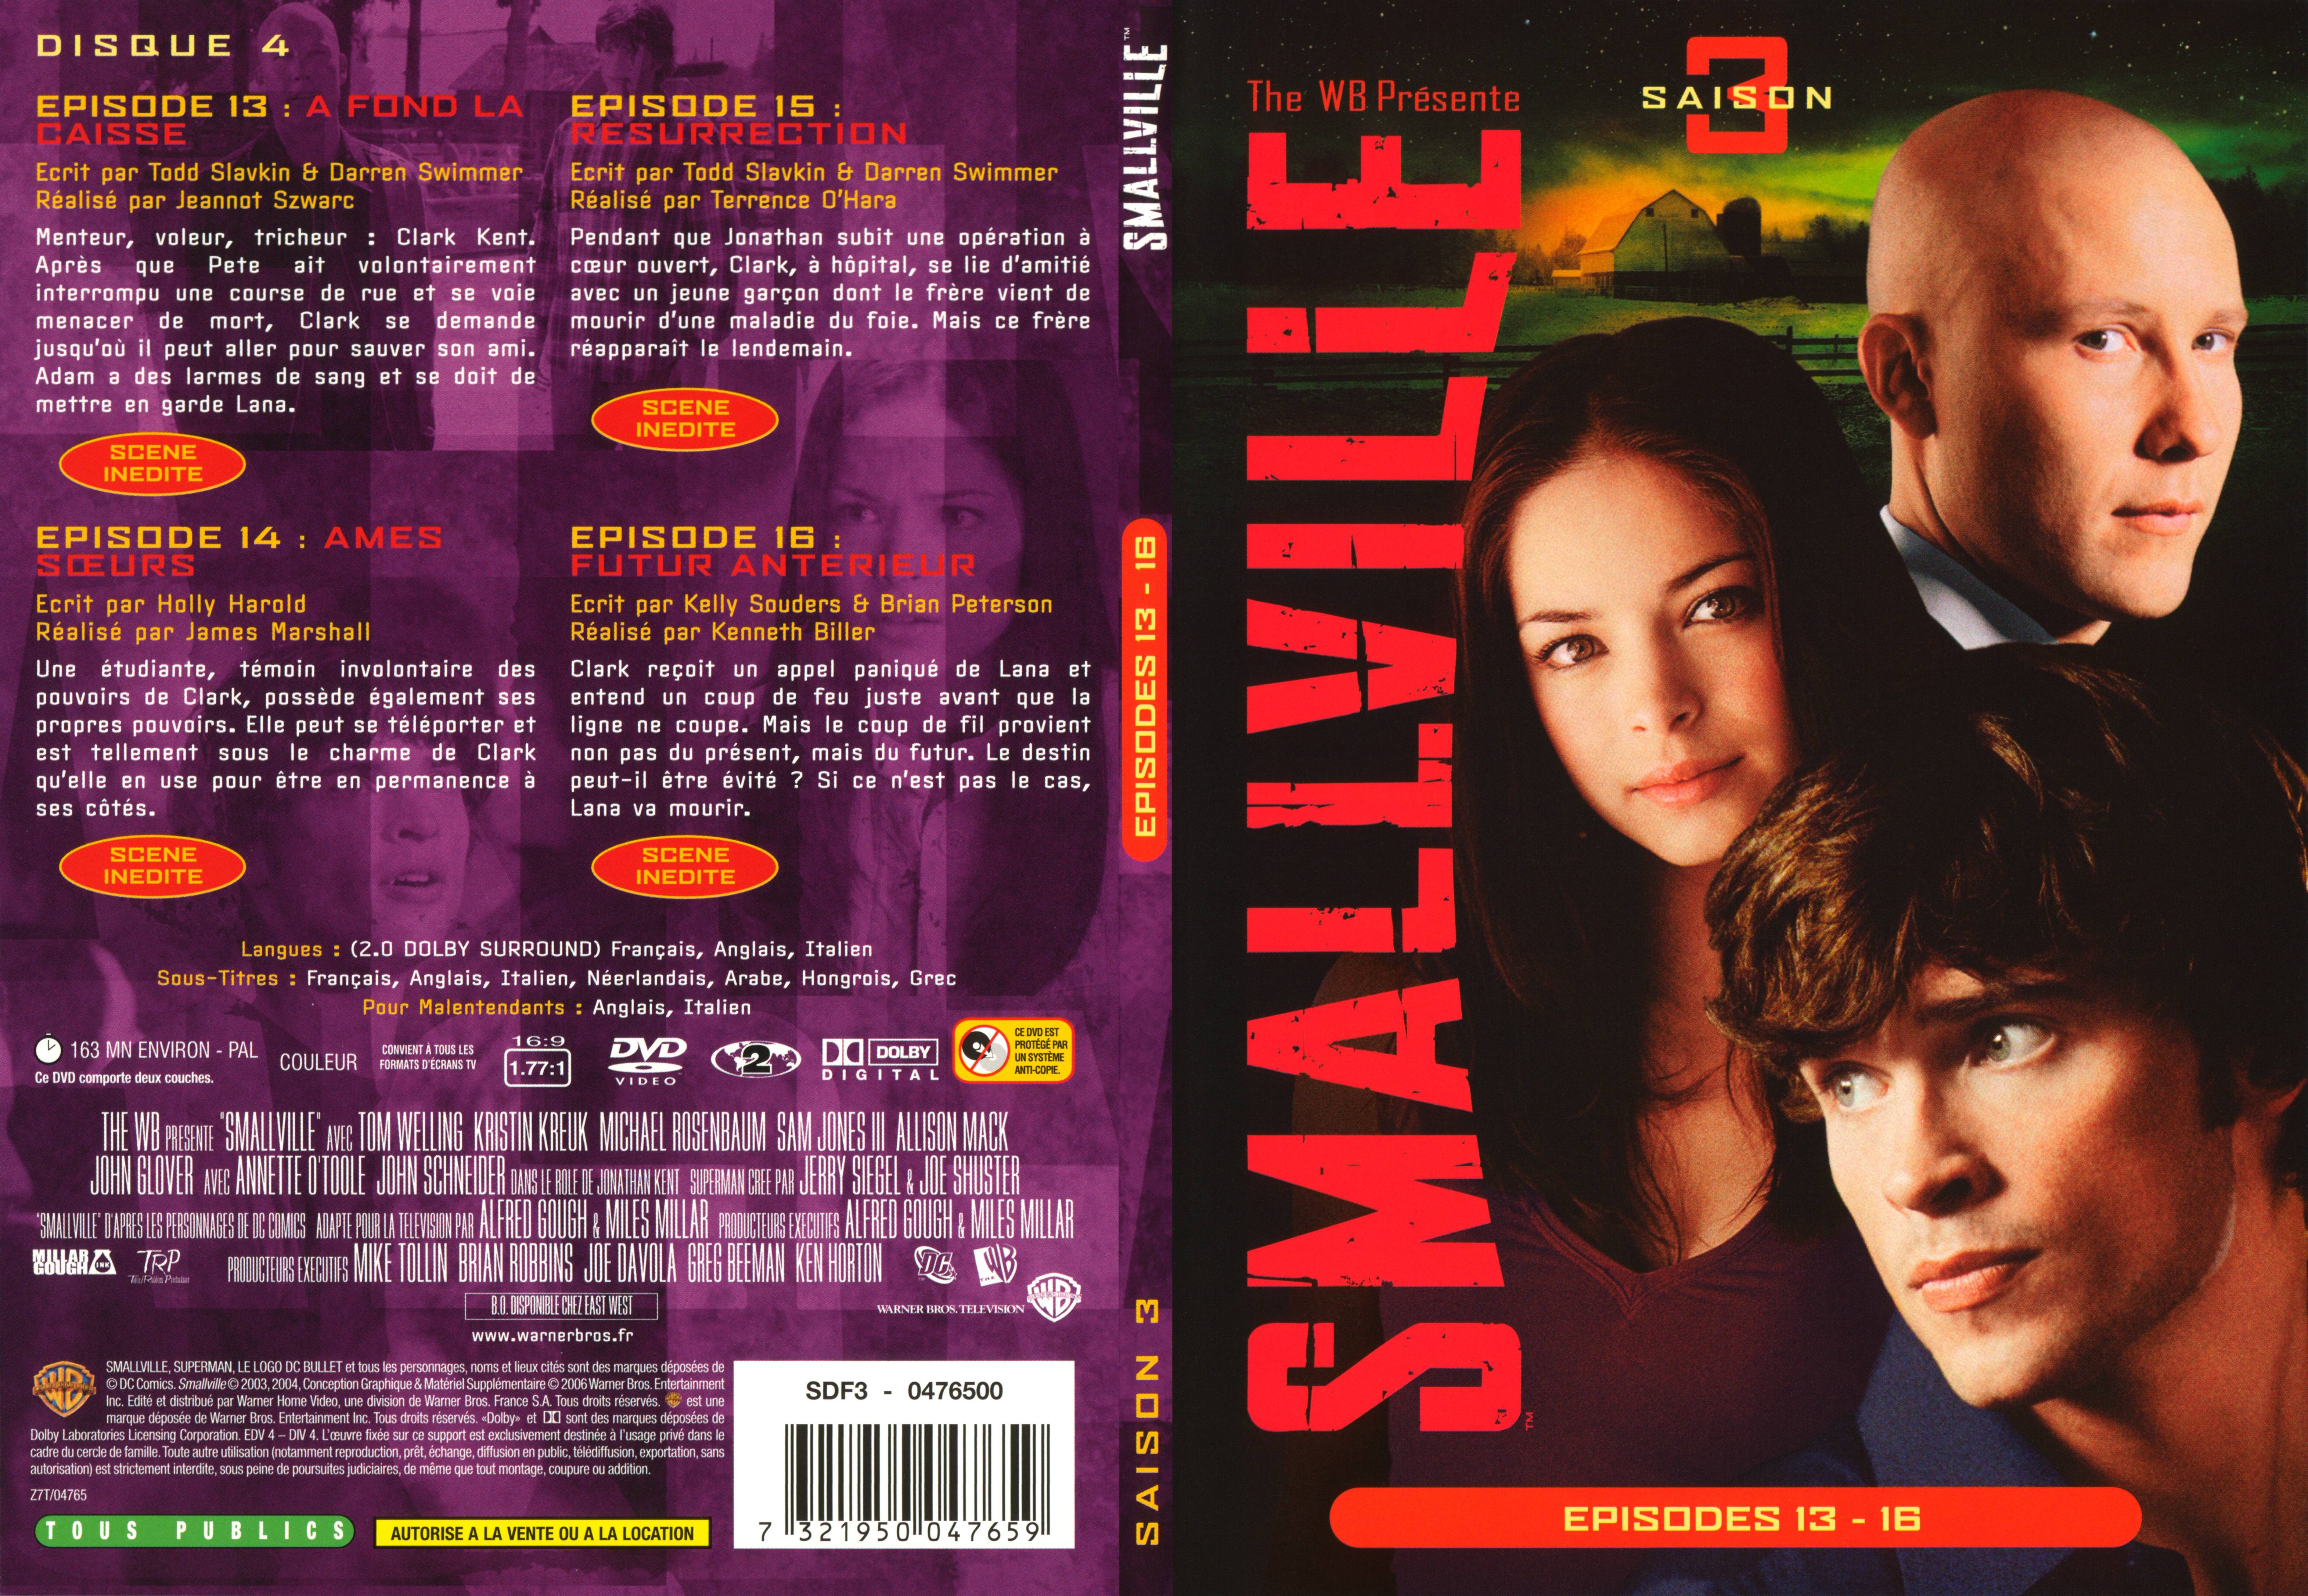 Jaquette DVD Smallville saison 3 DVD 4